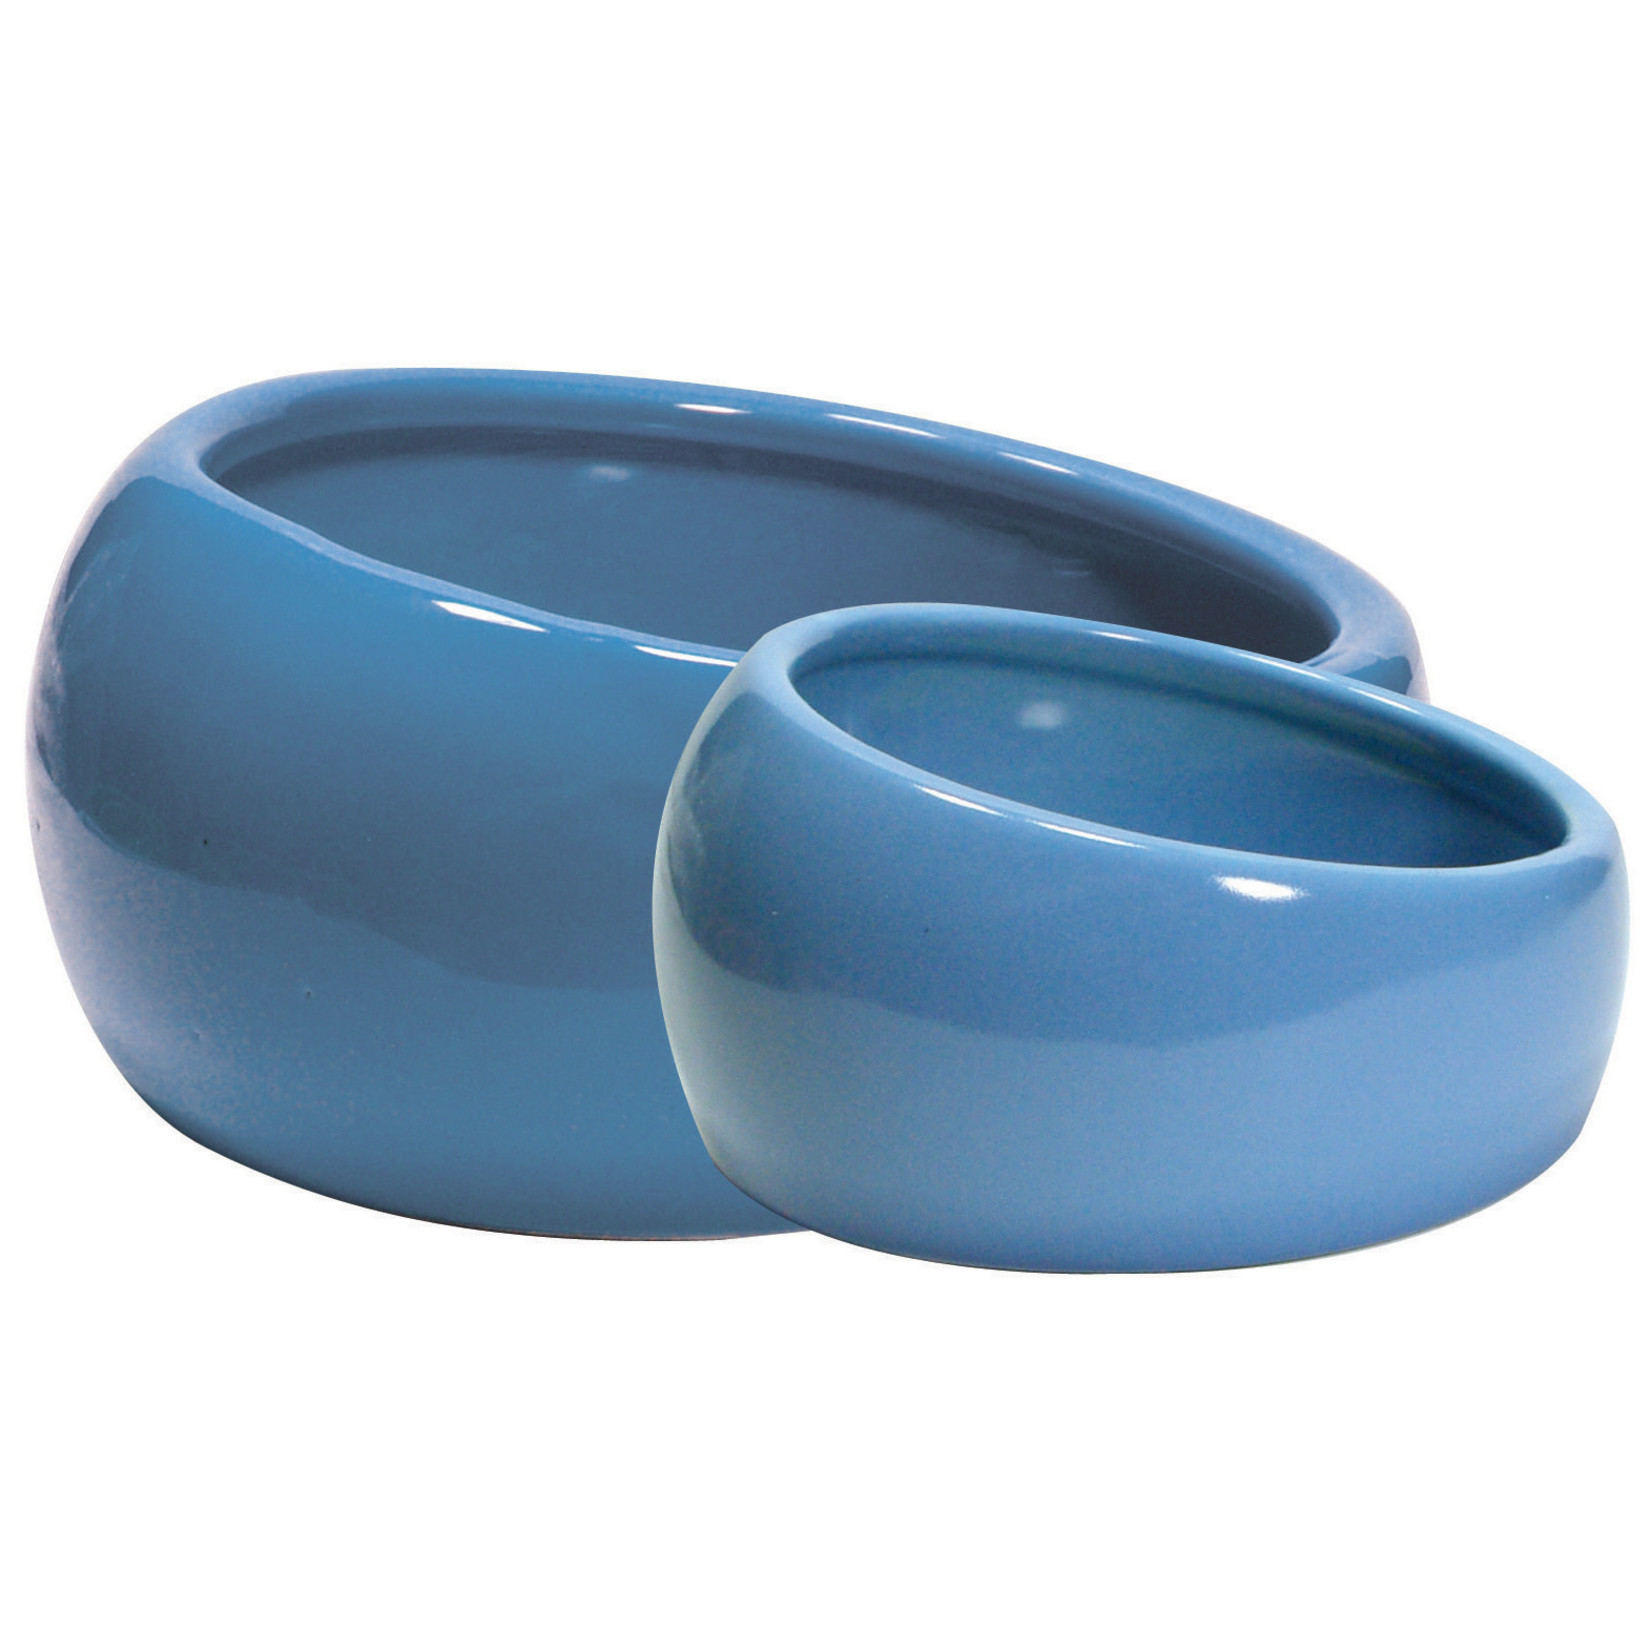 LIVING WORLD Living World Ergonomic Dish - Large - 420 mL (14.78 oz) - Blue/Ceramic